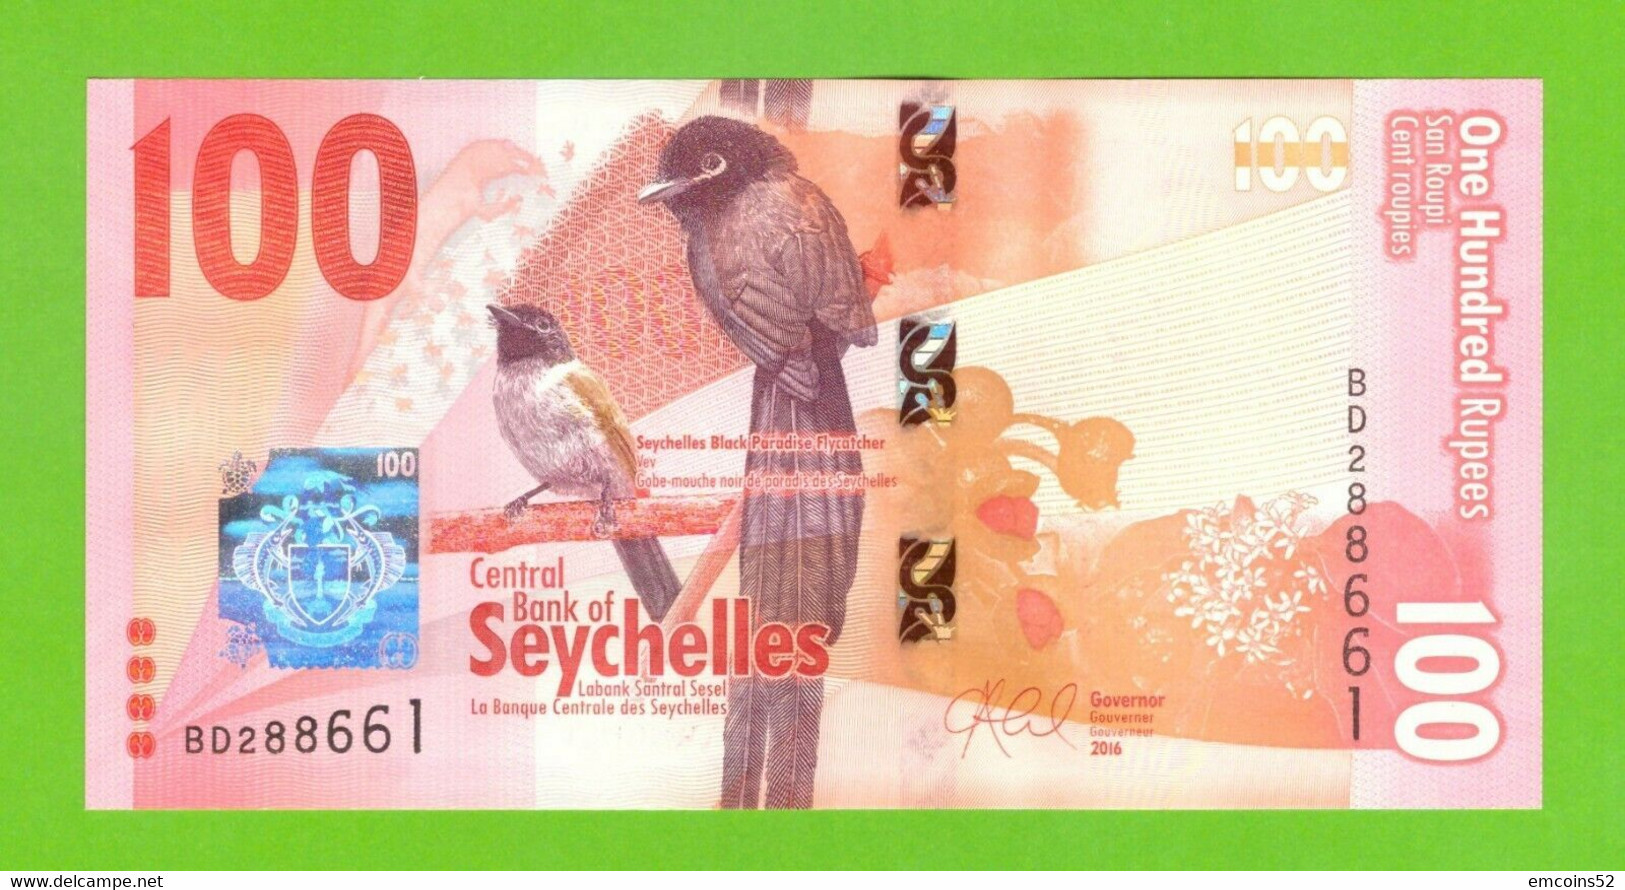 SEYCHELLES 100 RUPEES 2016  P-50  UNC - Seychelles